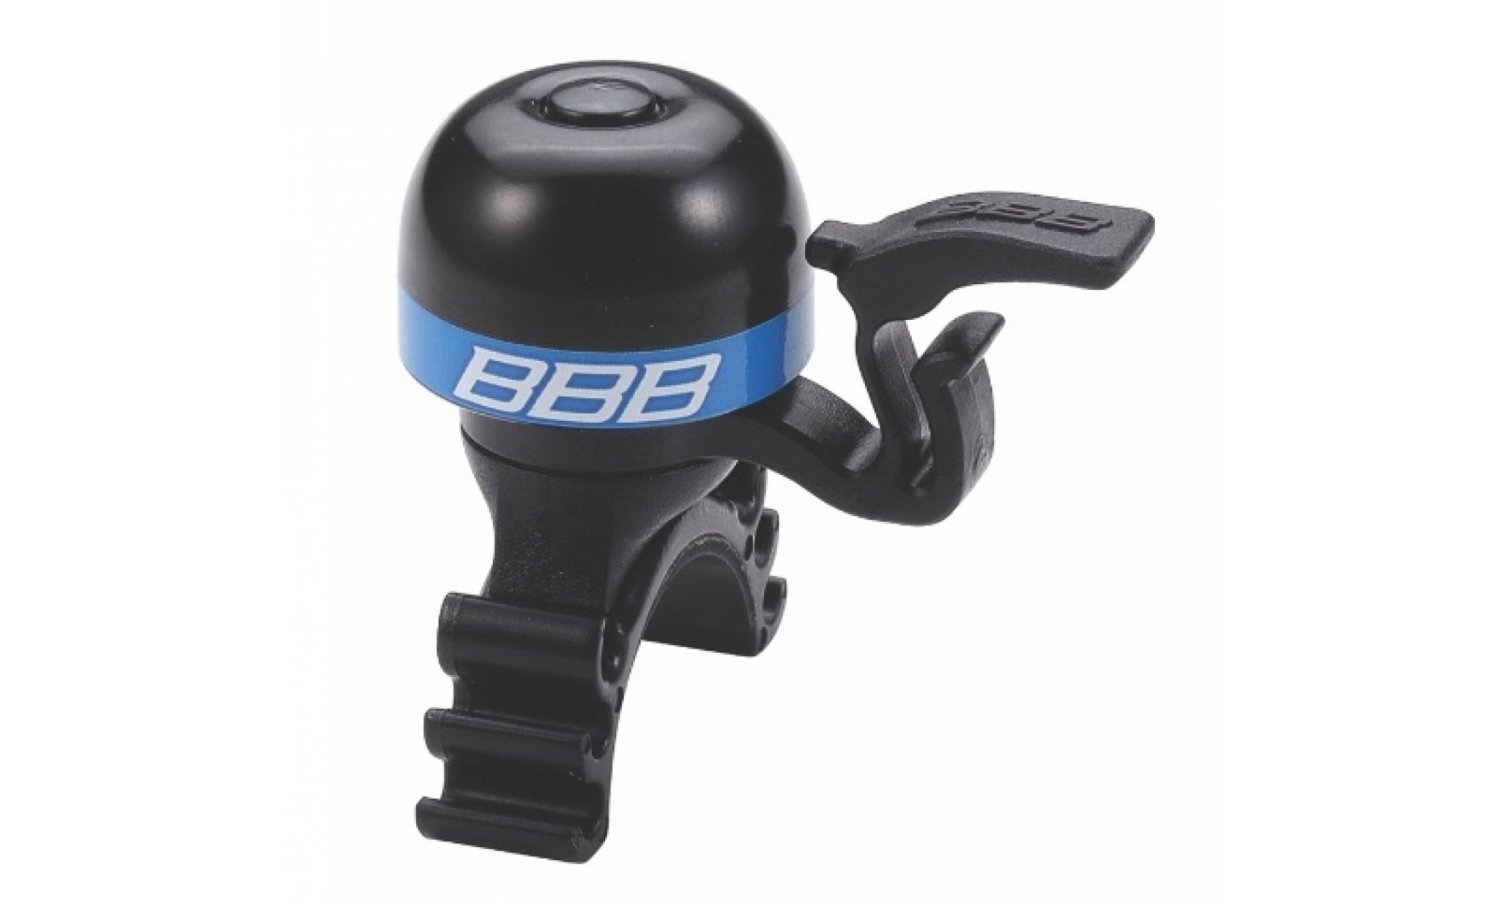 Звонок велосипедный BBB MiniFit, черный/синий, BBB-16 купить на ЖДБЗ.ру